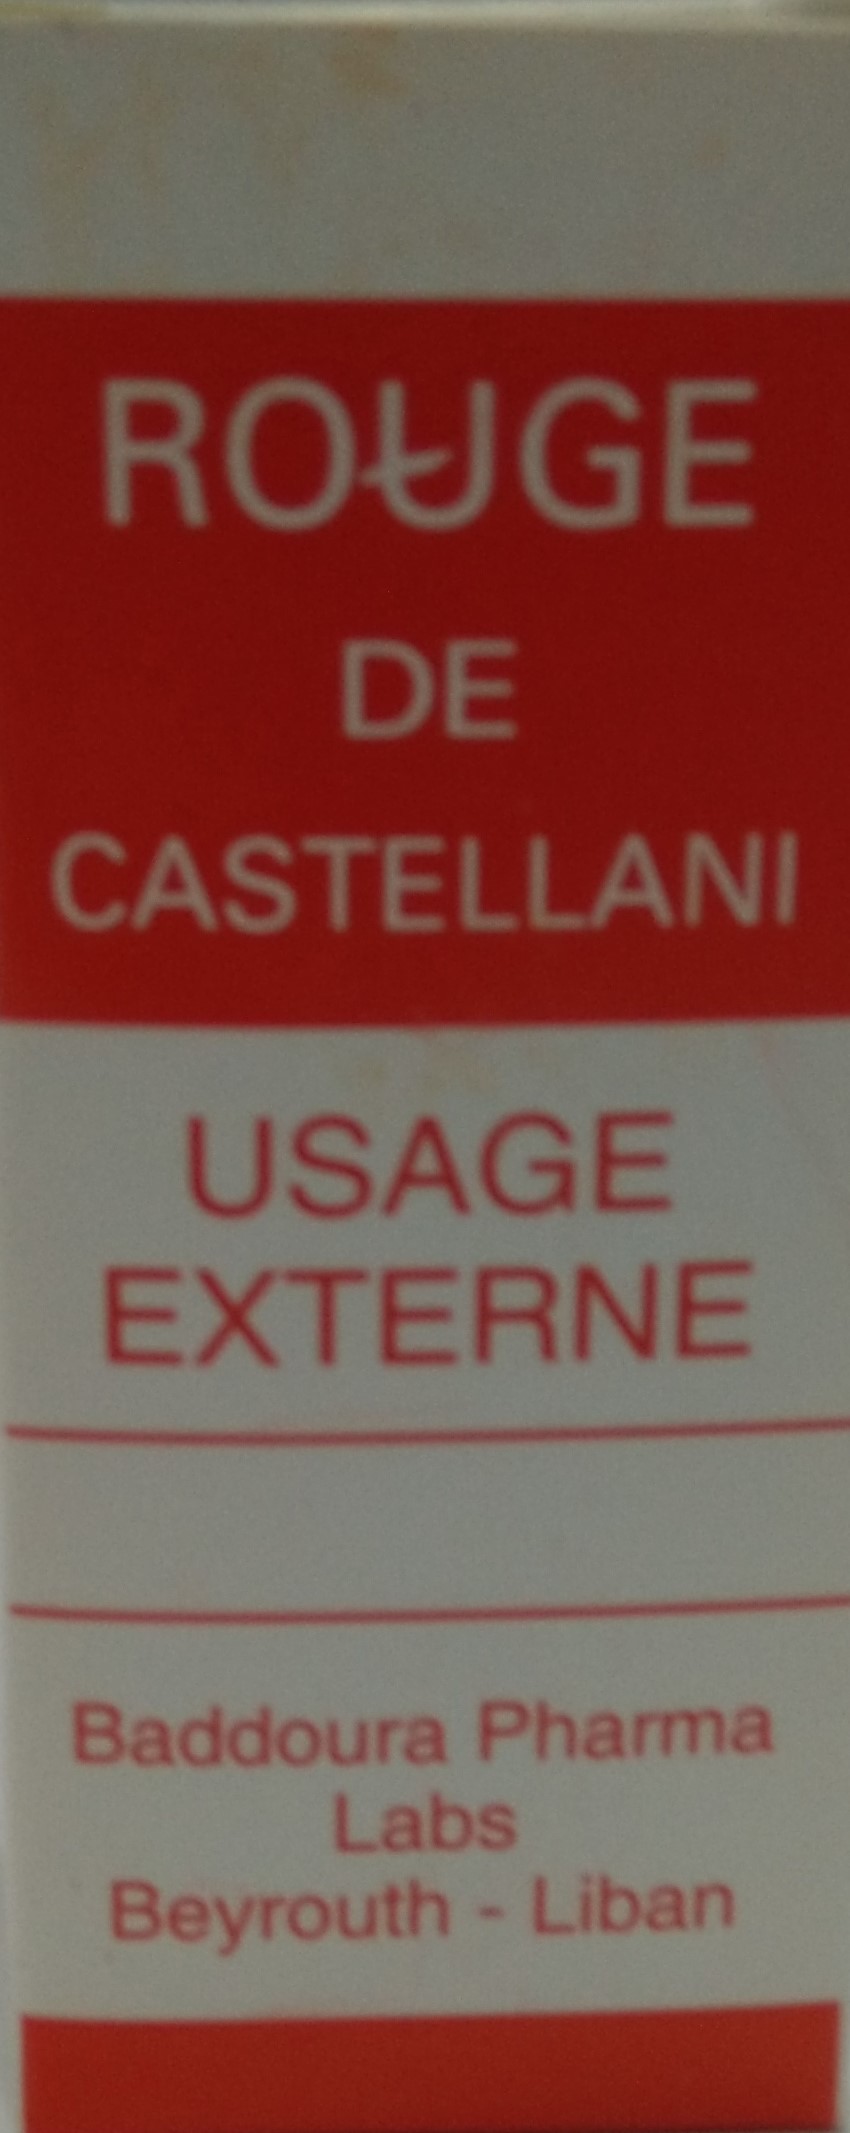 Rouge de Castellani Baddoura